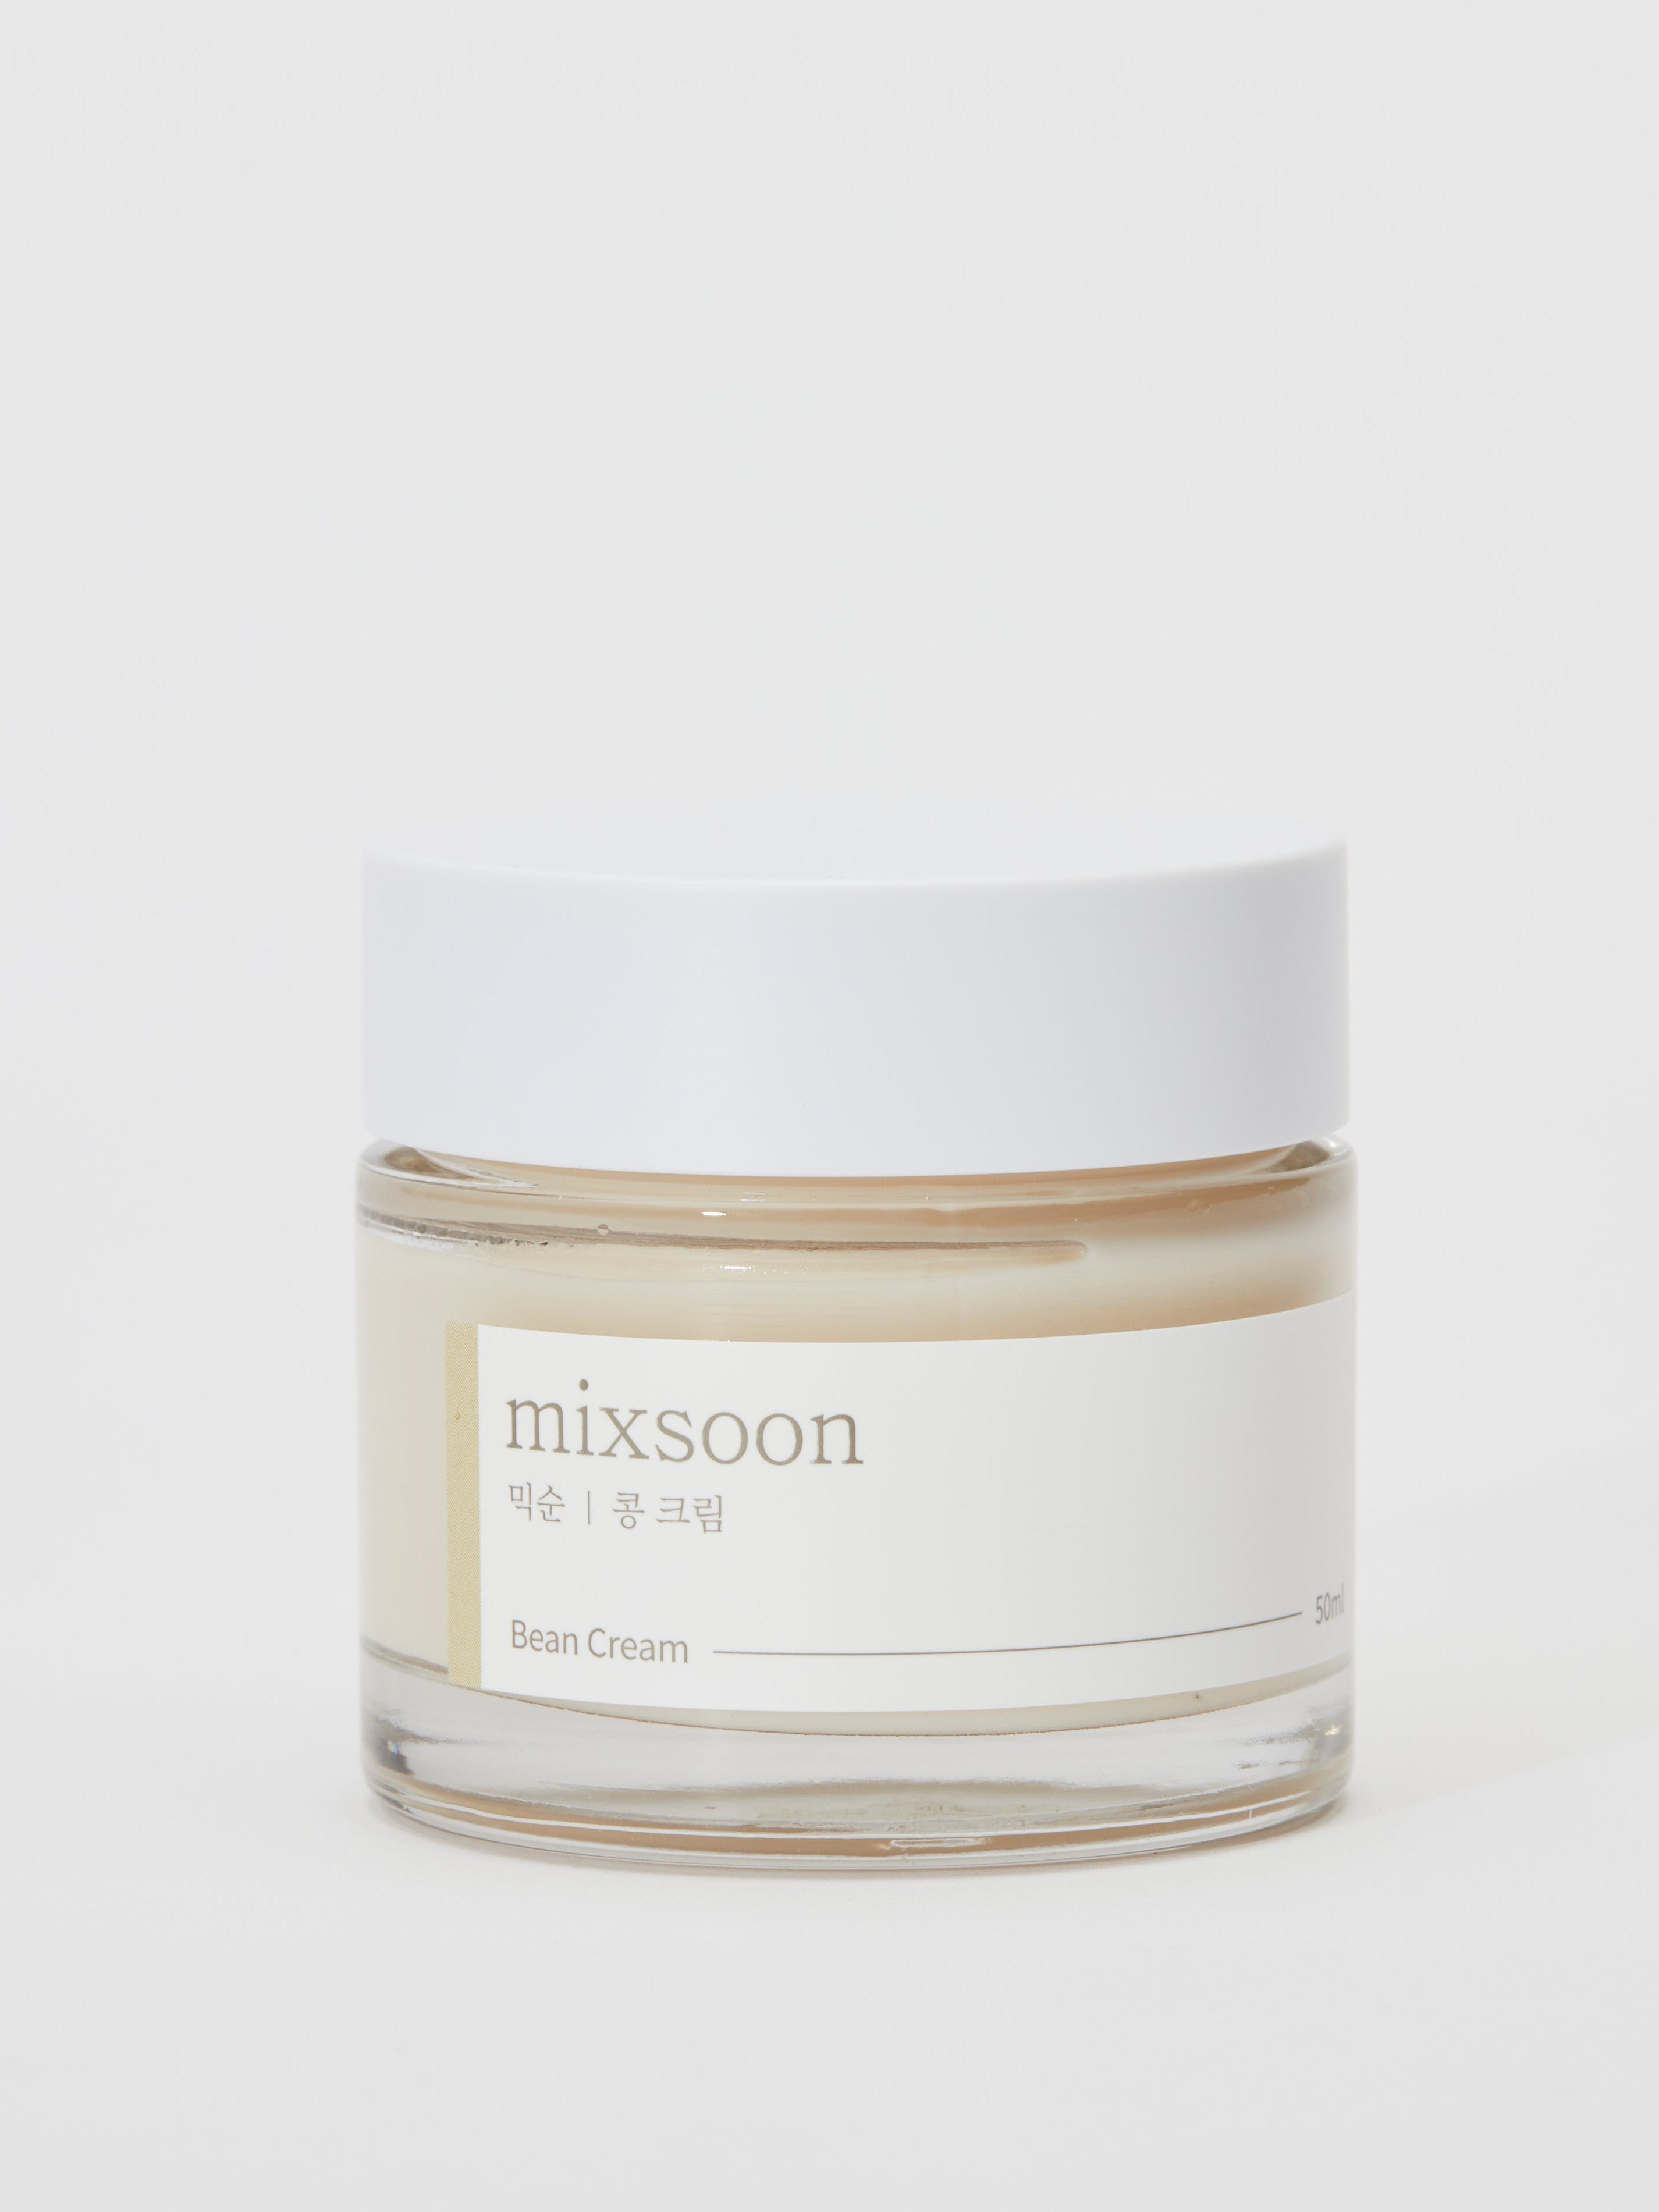 MIXSOON Bean Cream | Song of Skin